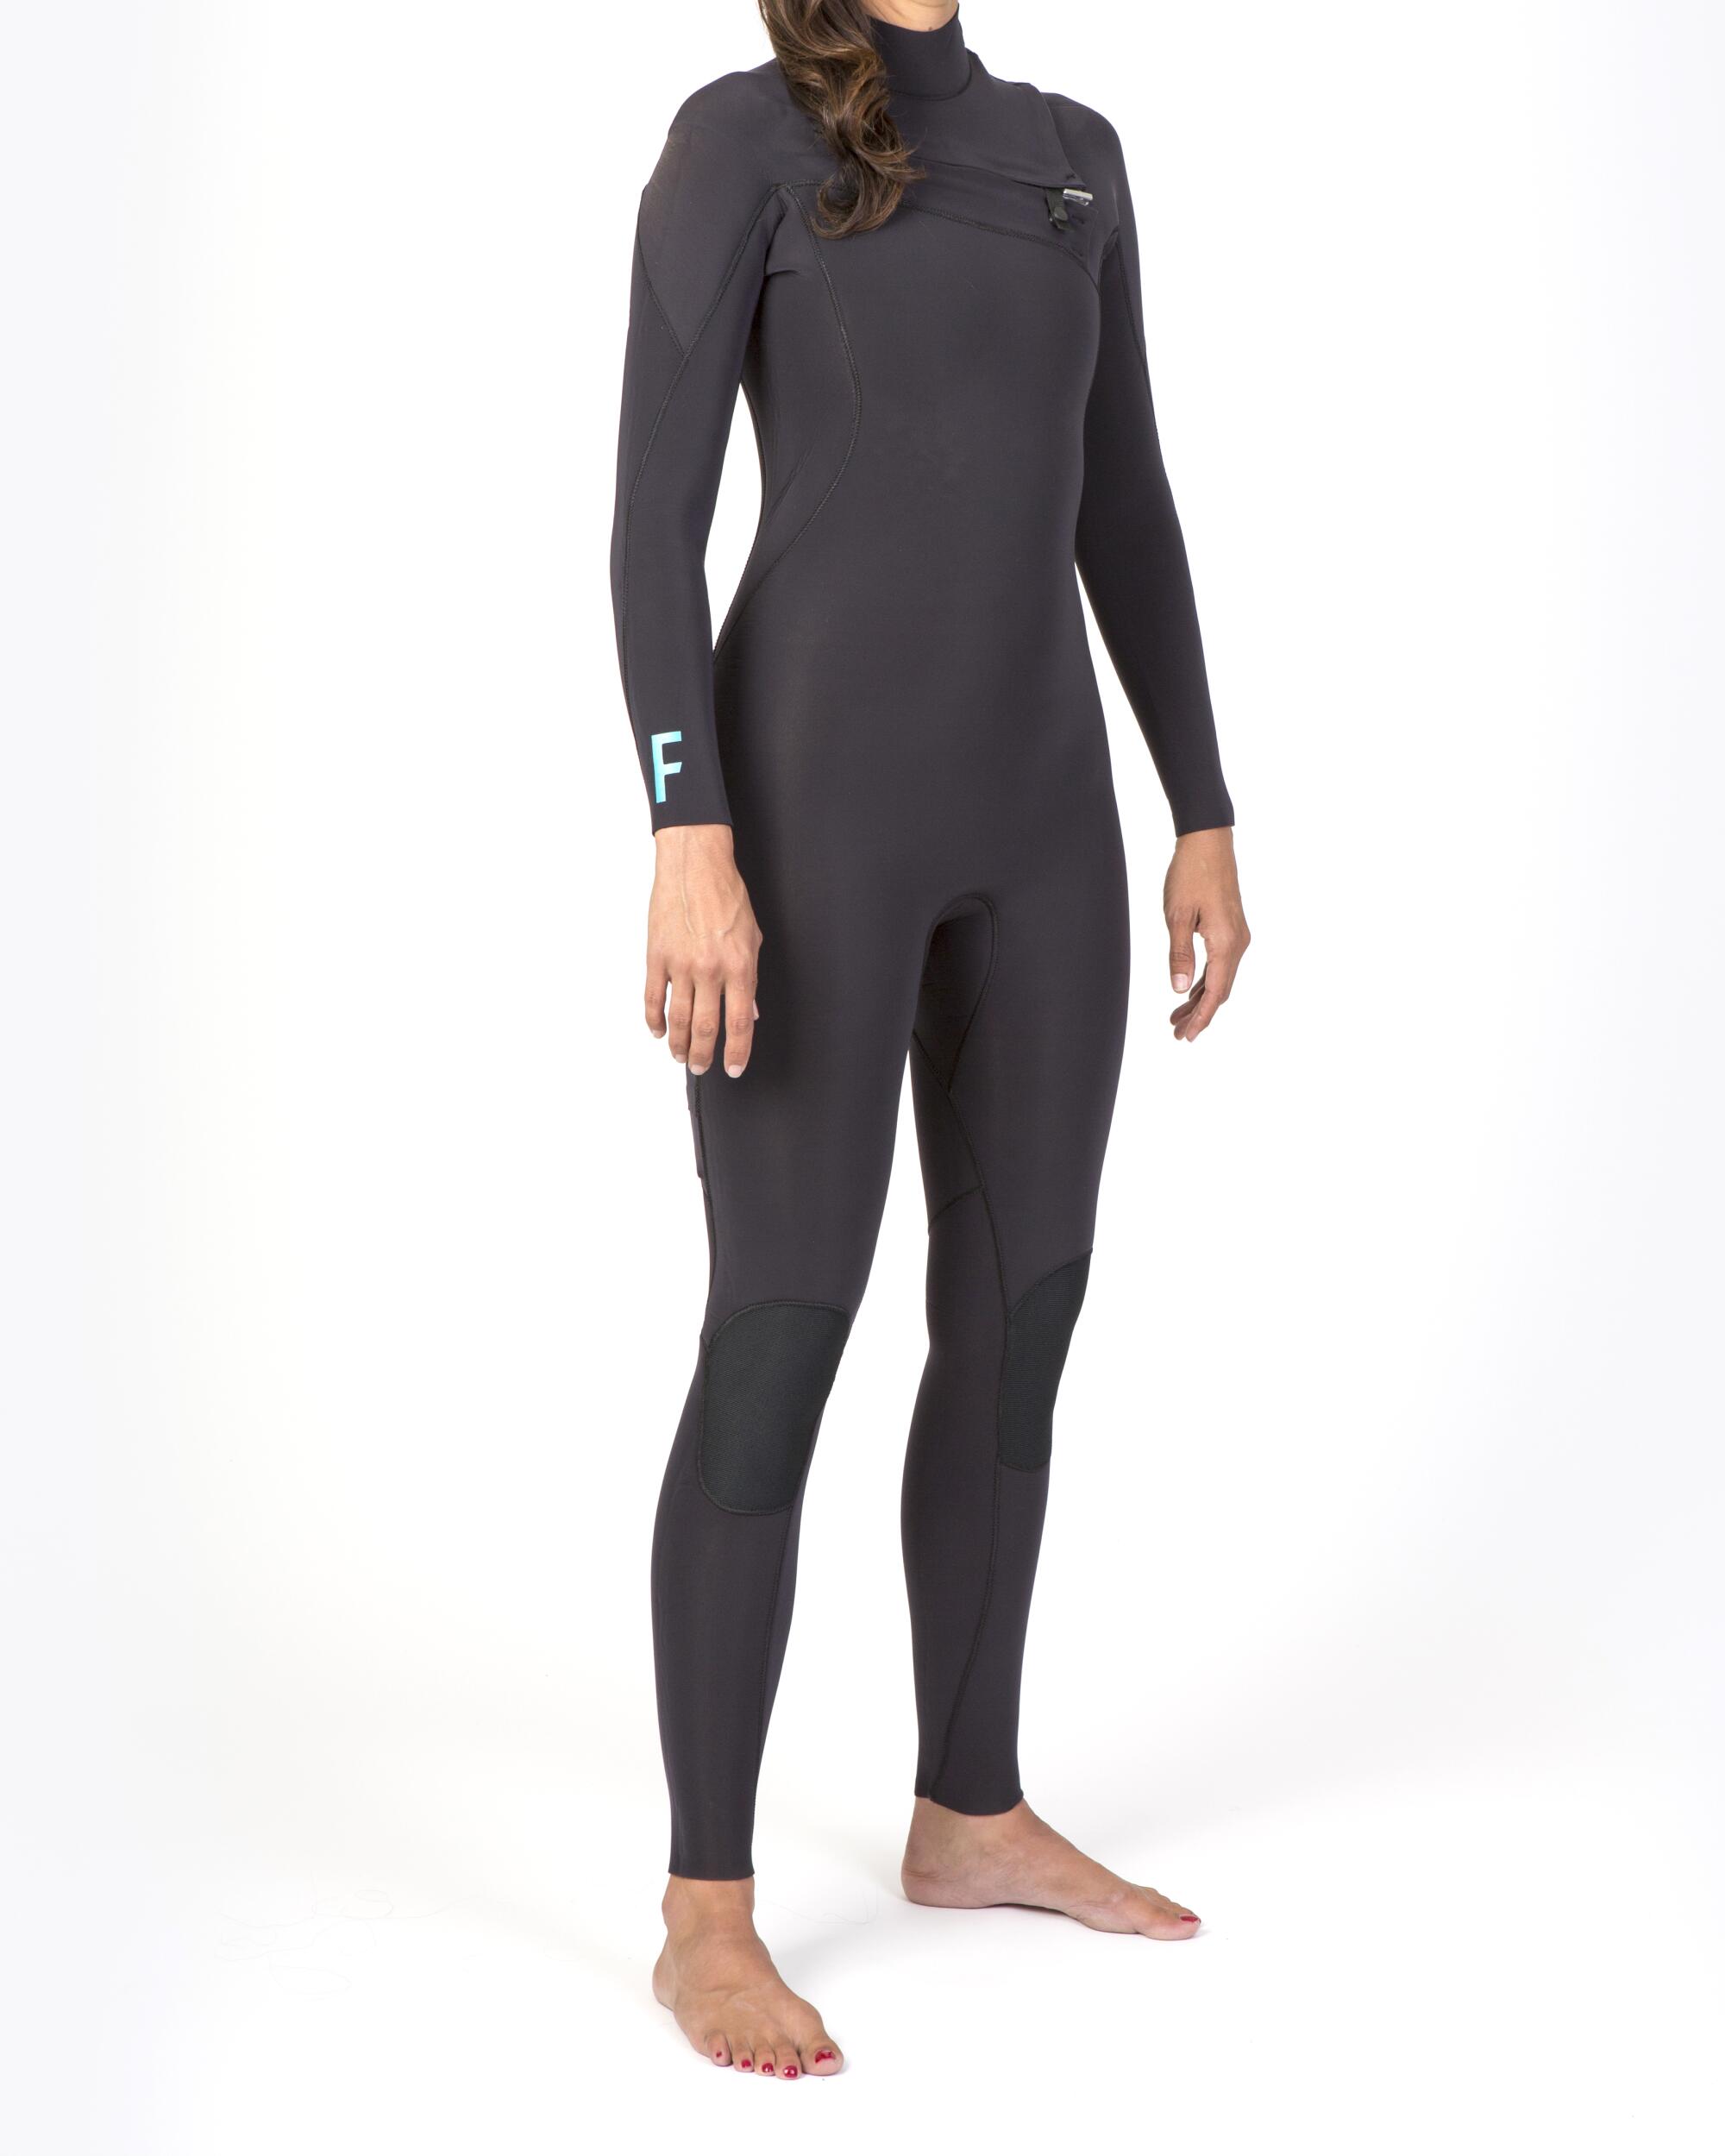 FEEAL Women's 4/3 Mil chest zip wetsuit